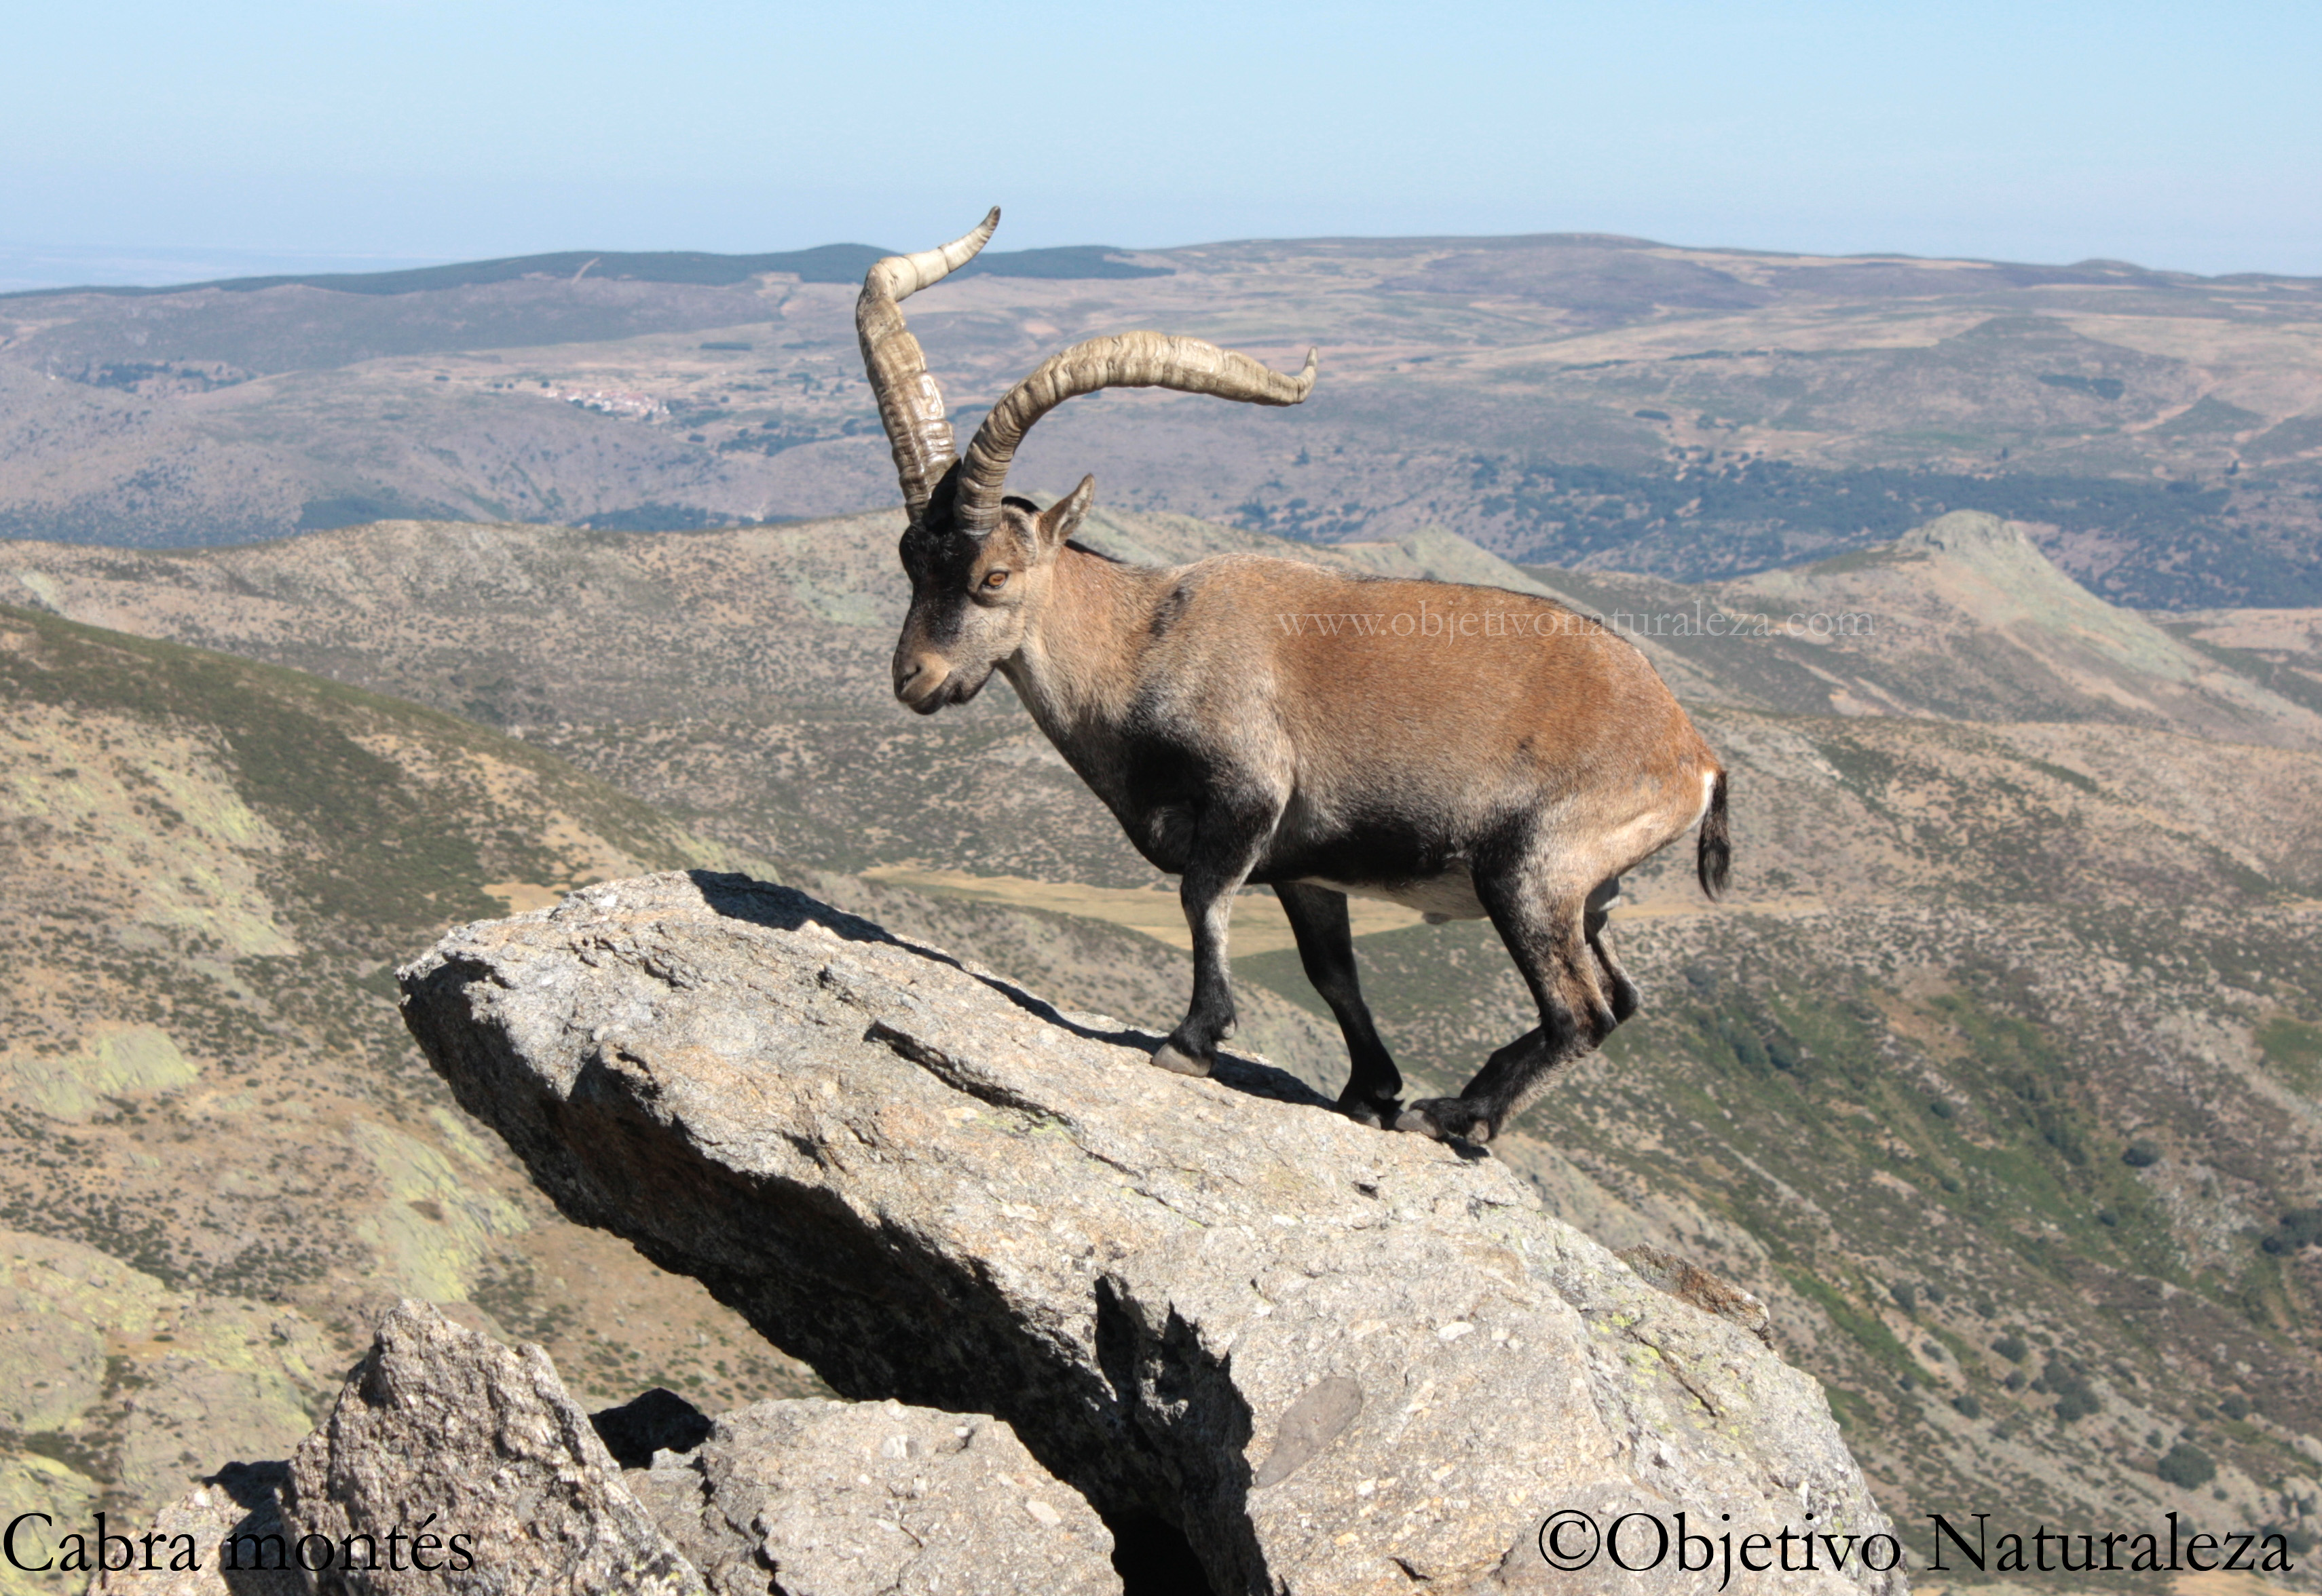 Cabra montés- Iberian ibex